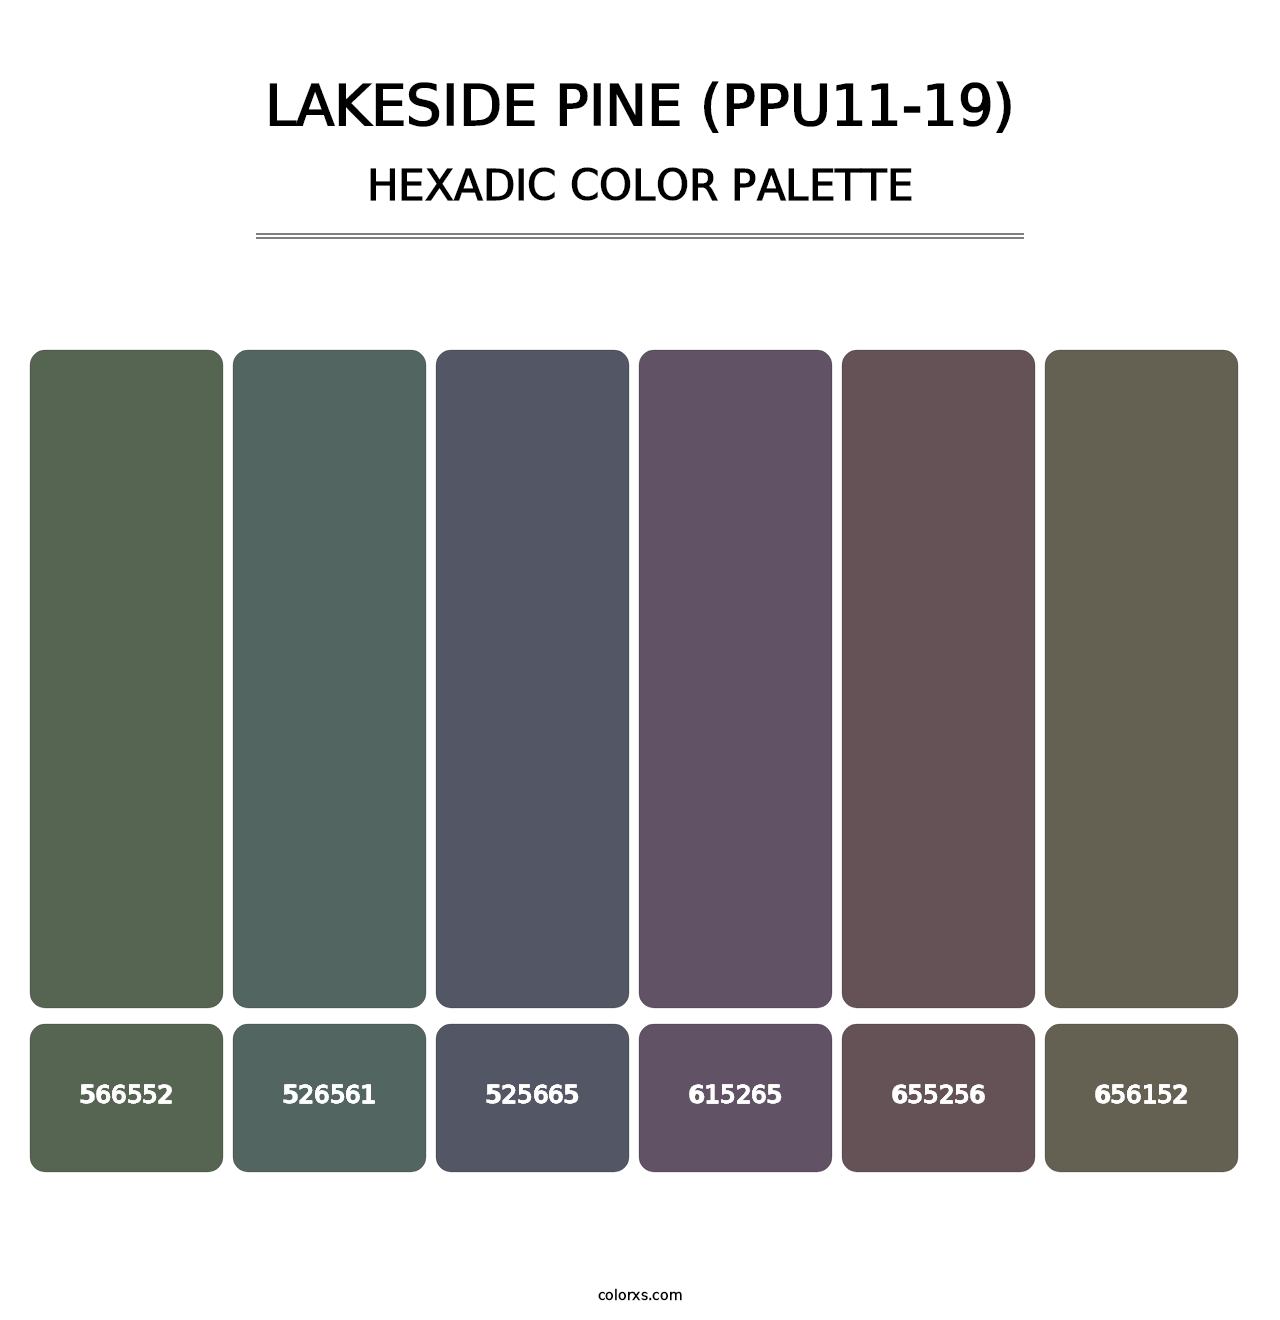 Lakeside Pine (PPU11-19) - Hexadic Color Palette